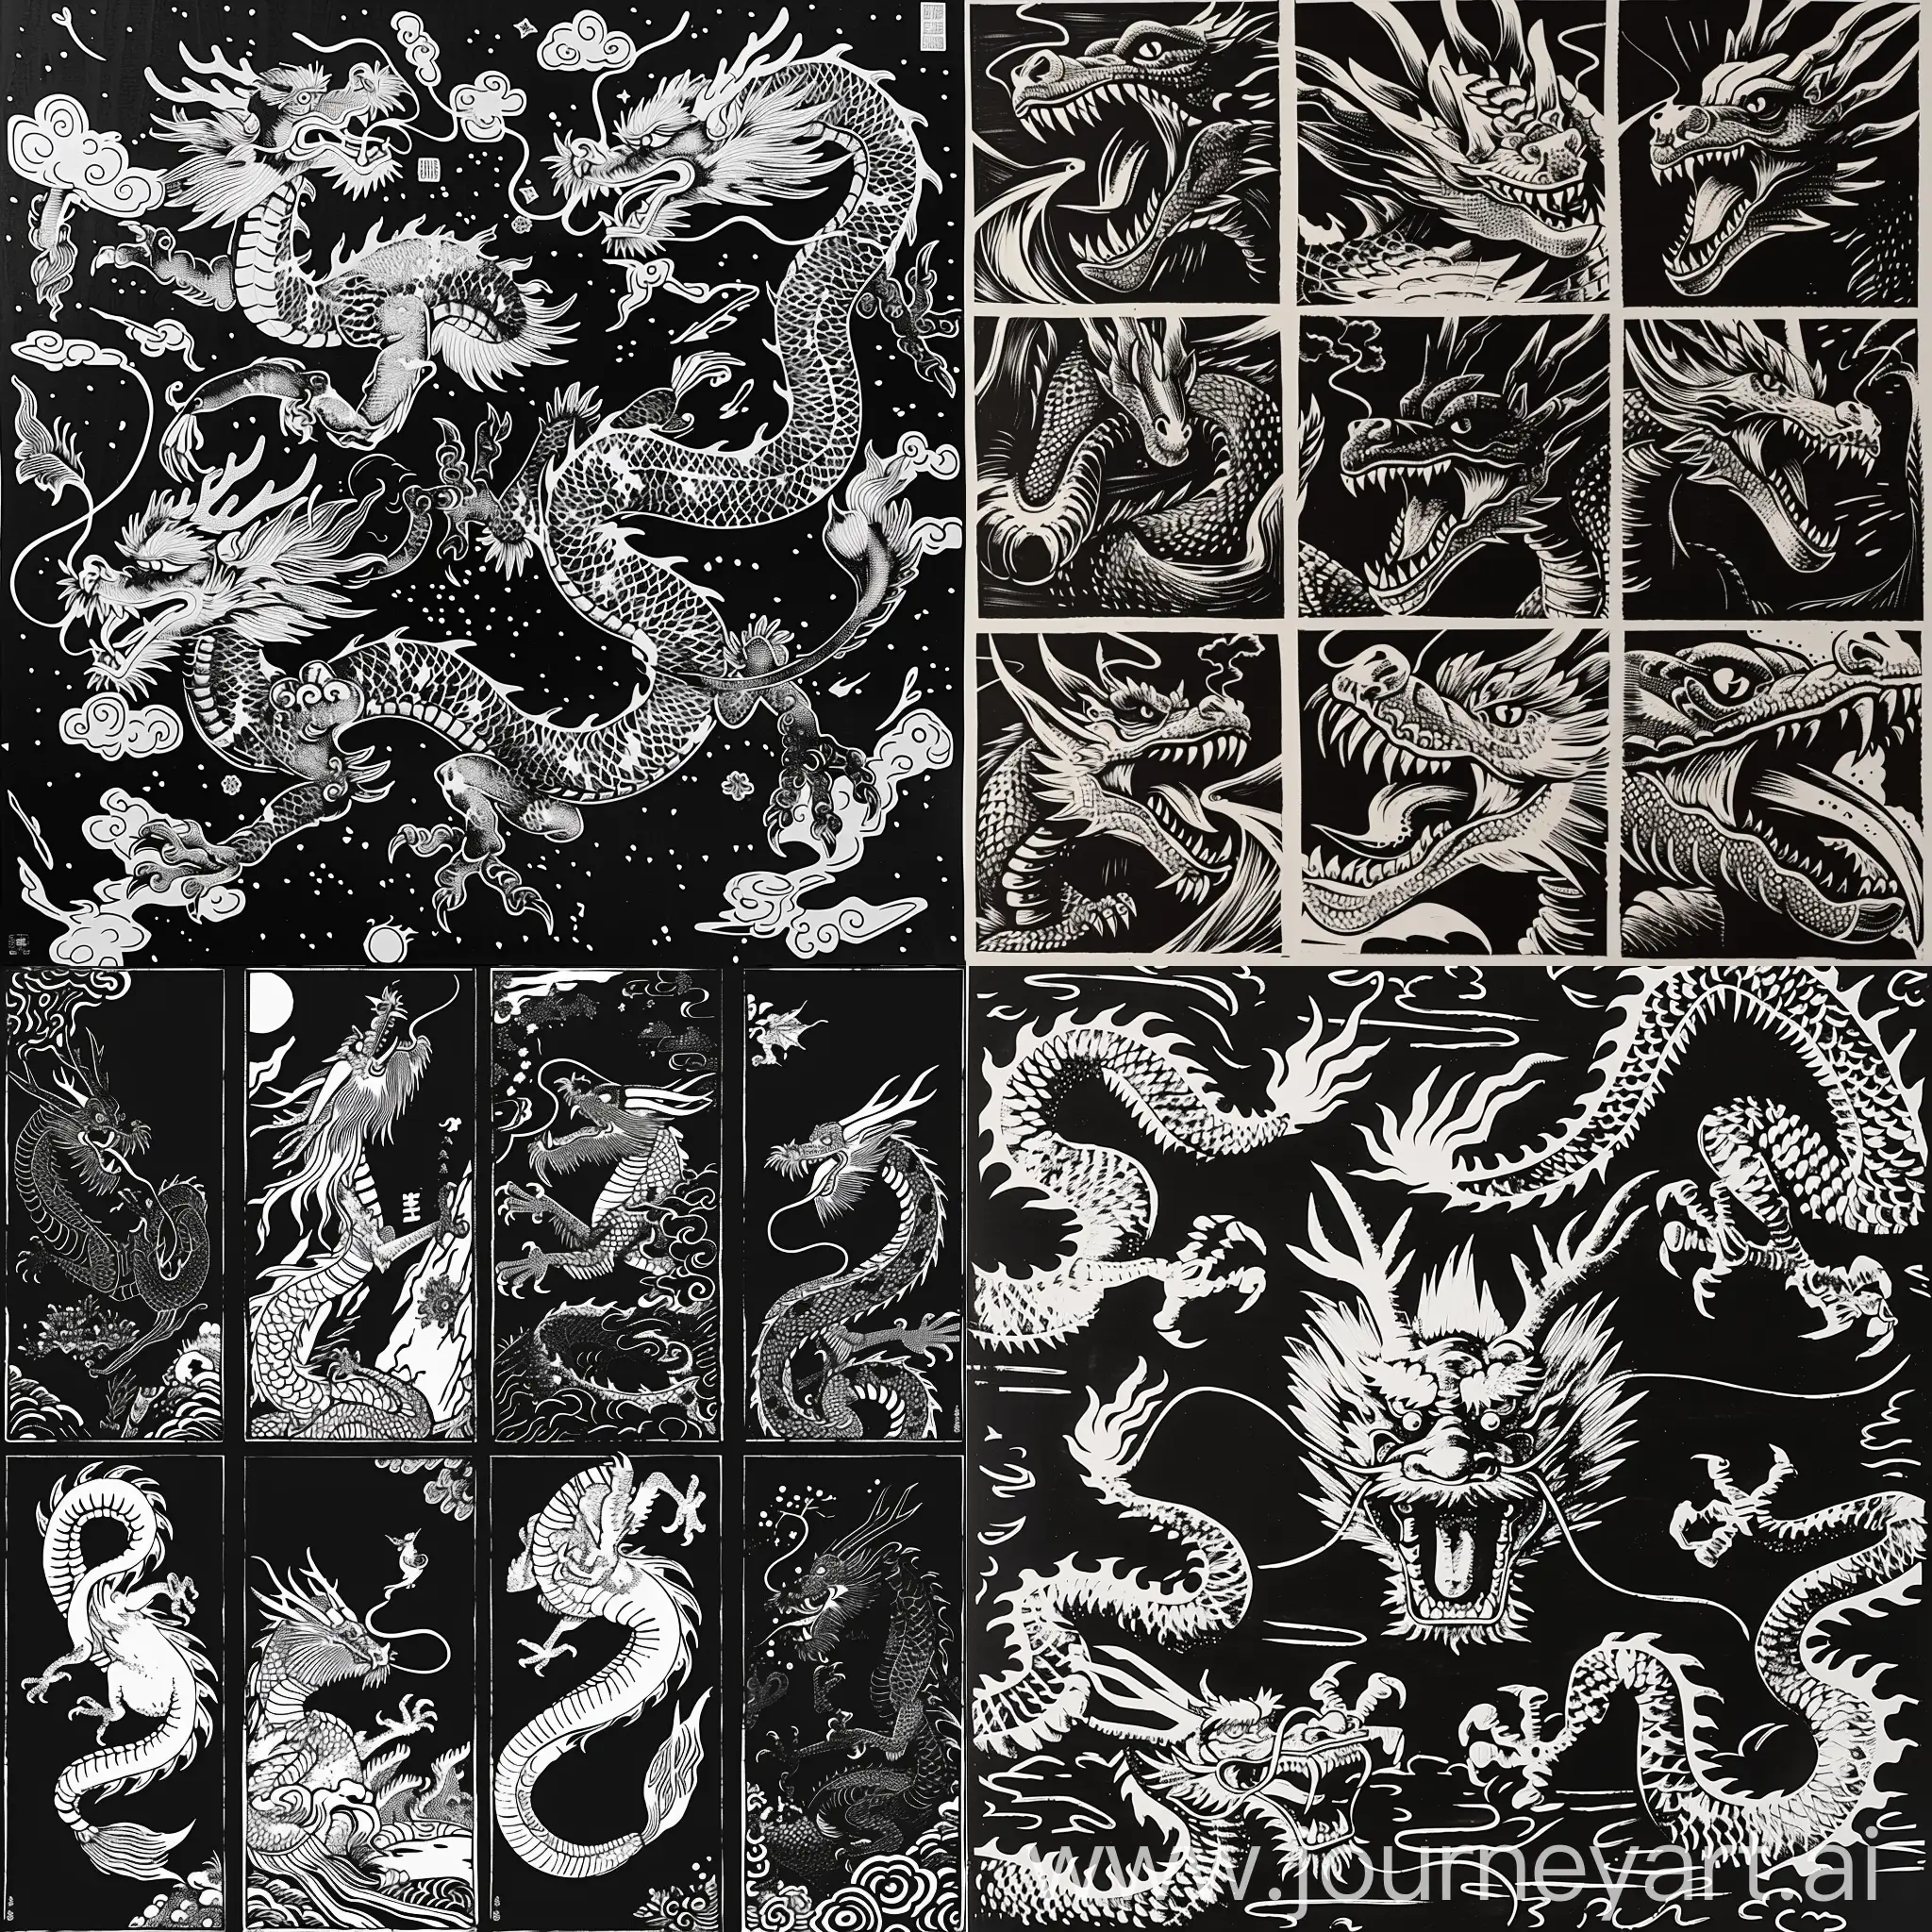 Dynamic-Dragon-Woodcut-Prints-Intricately-Detailed-Black-and-White-Artwork-Series